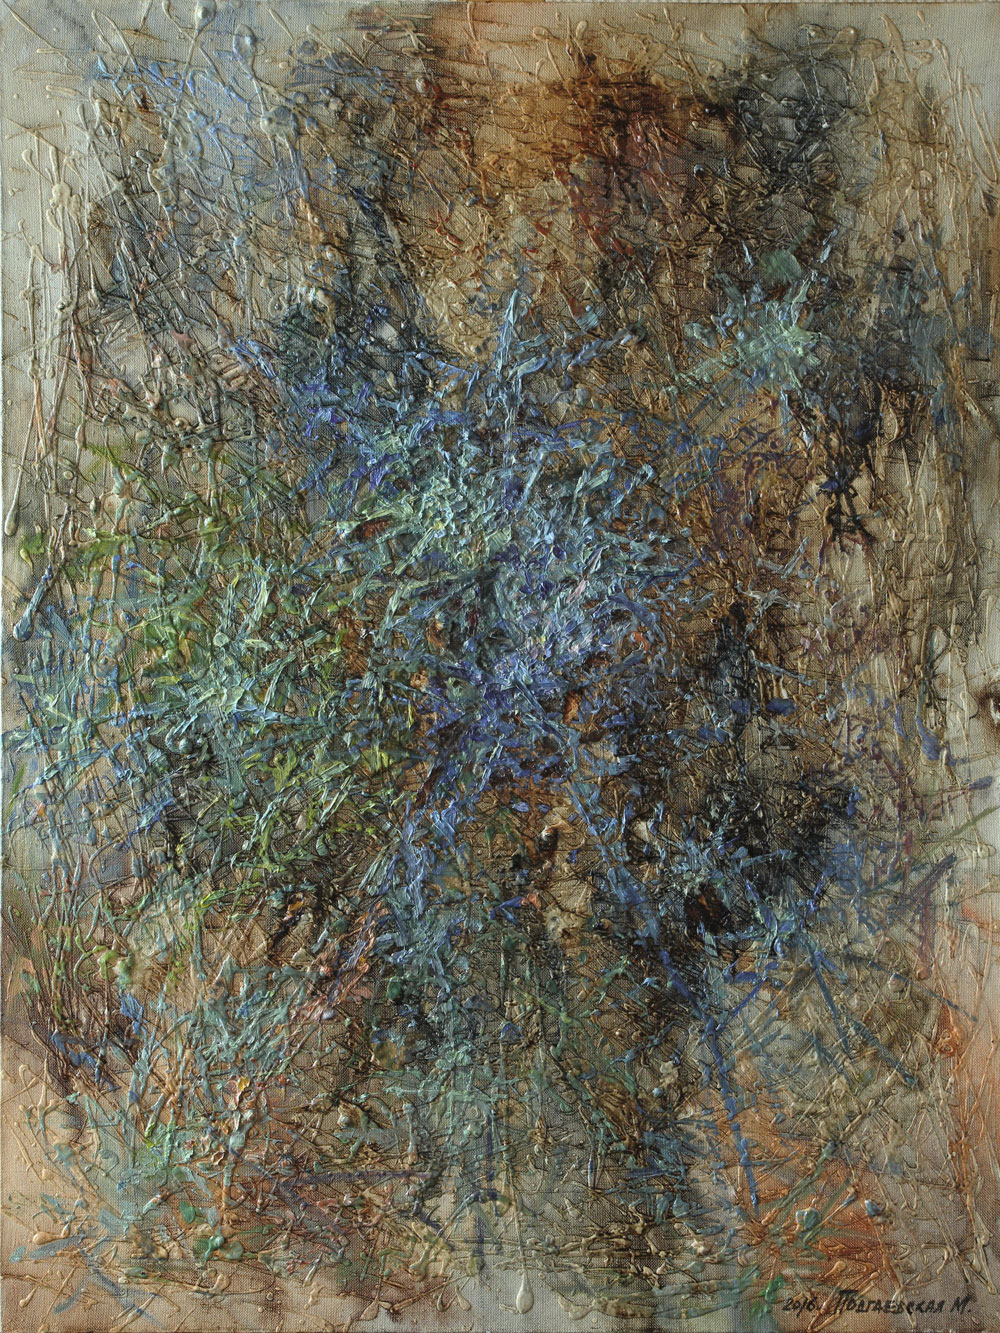 Blue Water #2 - 1, Marina Podgaevskaya, Buy the painting Mixed media